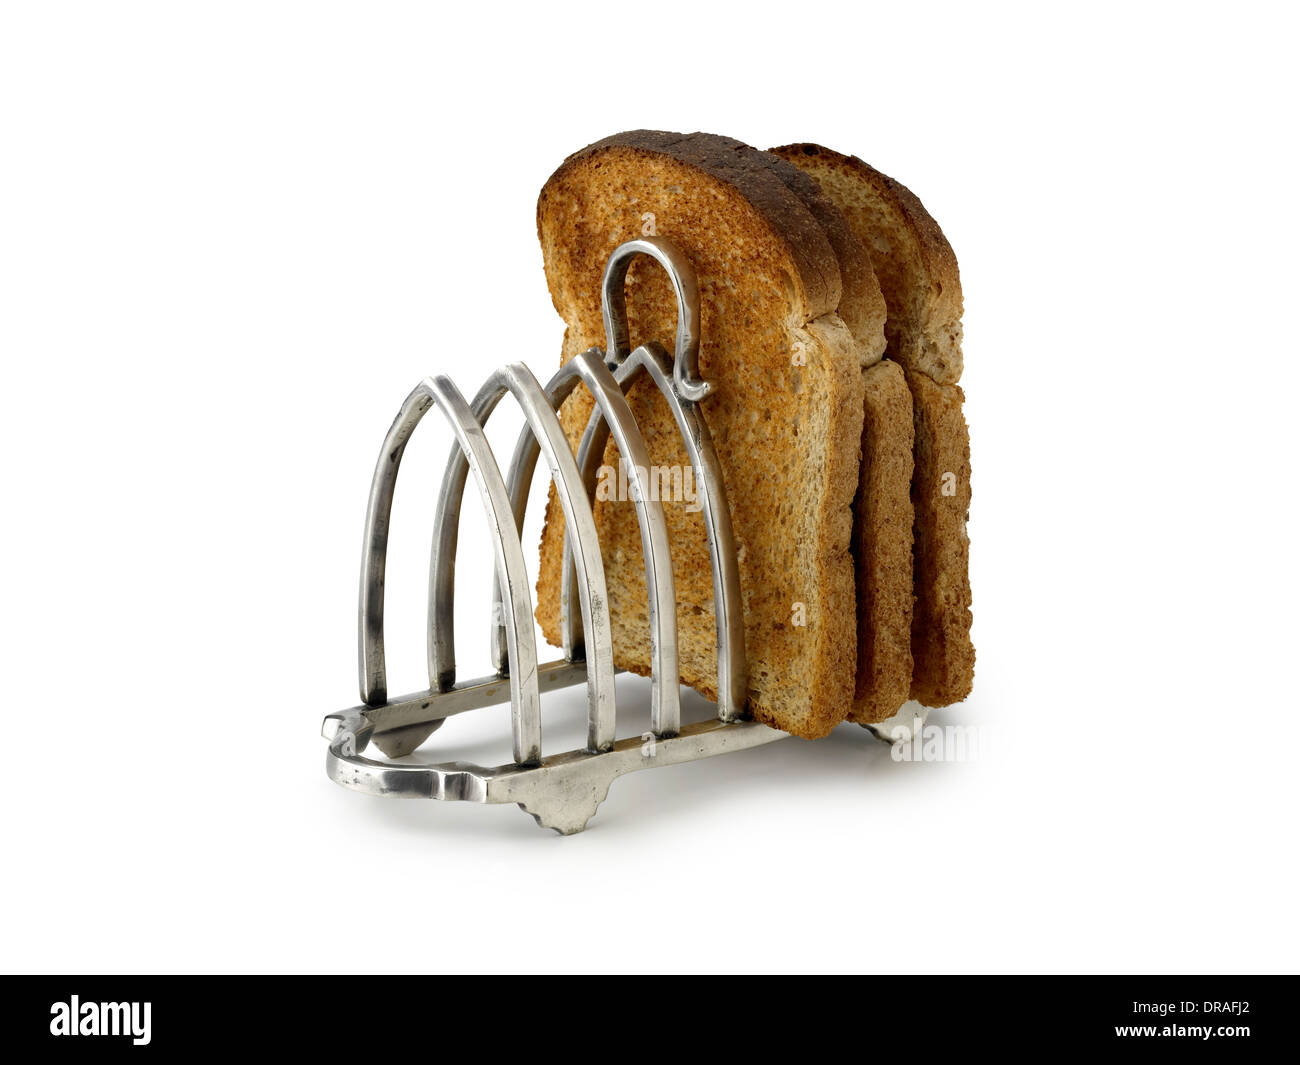 https://c8.alamy.com/comp/DRAFJ2/toast-and-toast-rack-DRAFJ2.jpg